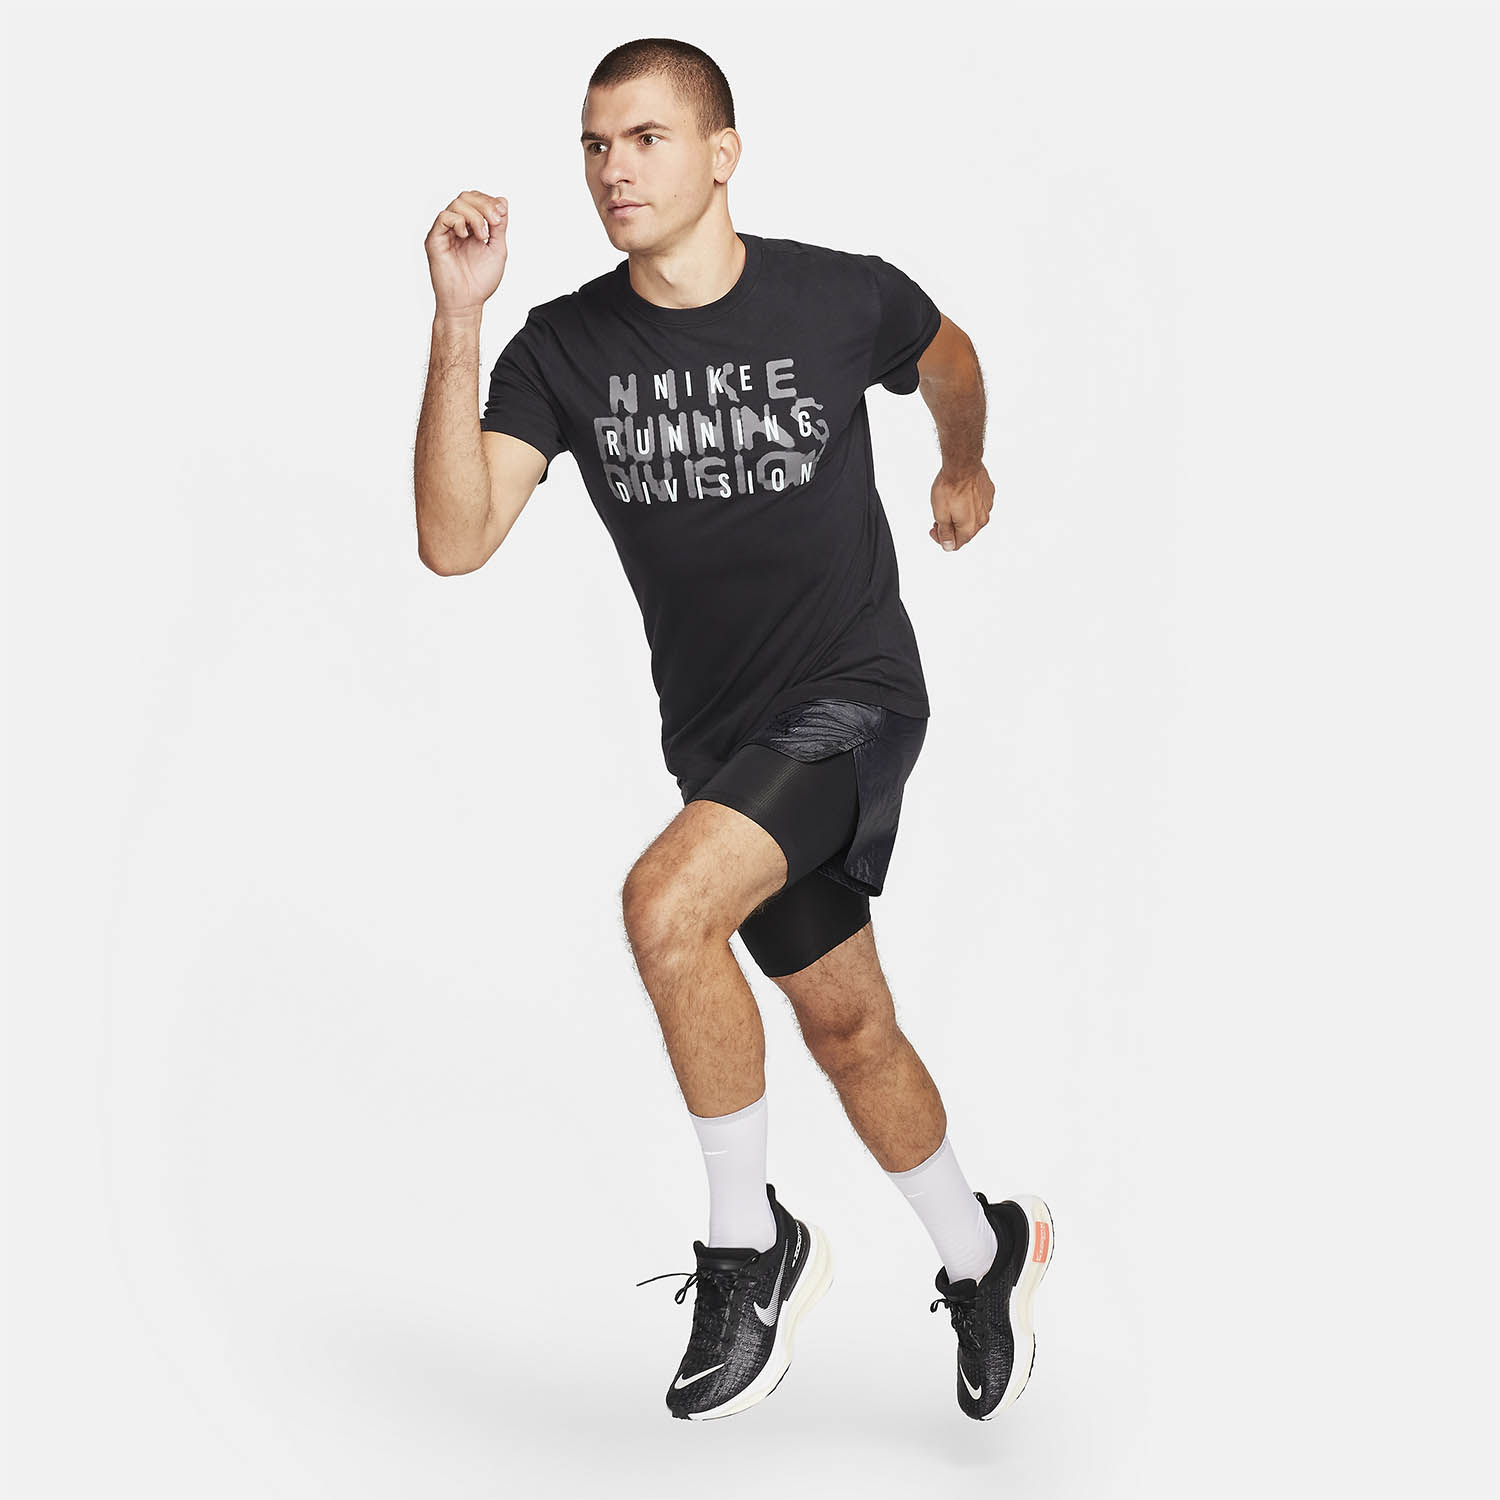 Nike Run Division Men's Running T-Shirt - Black